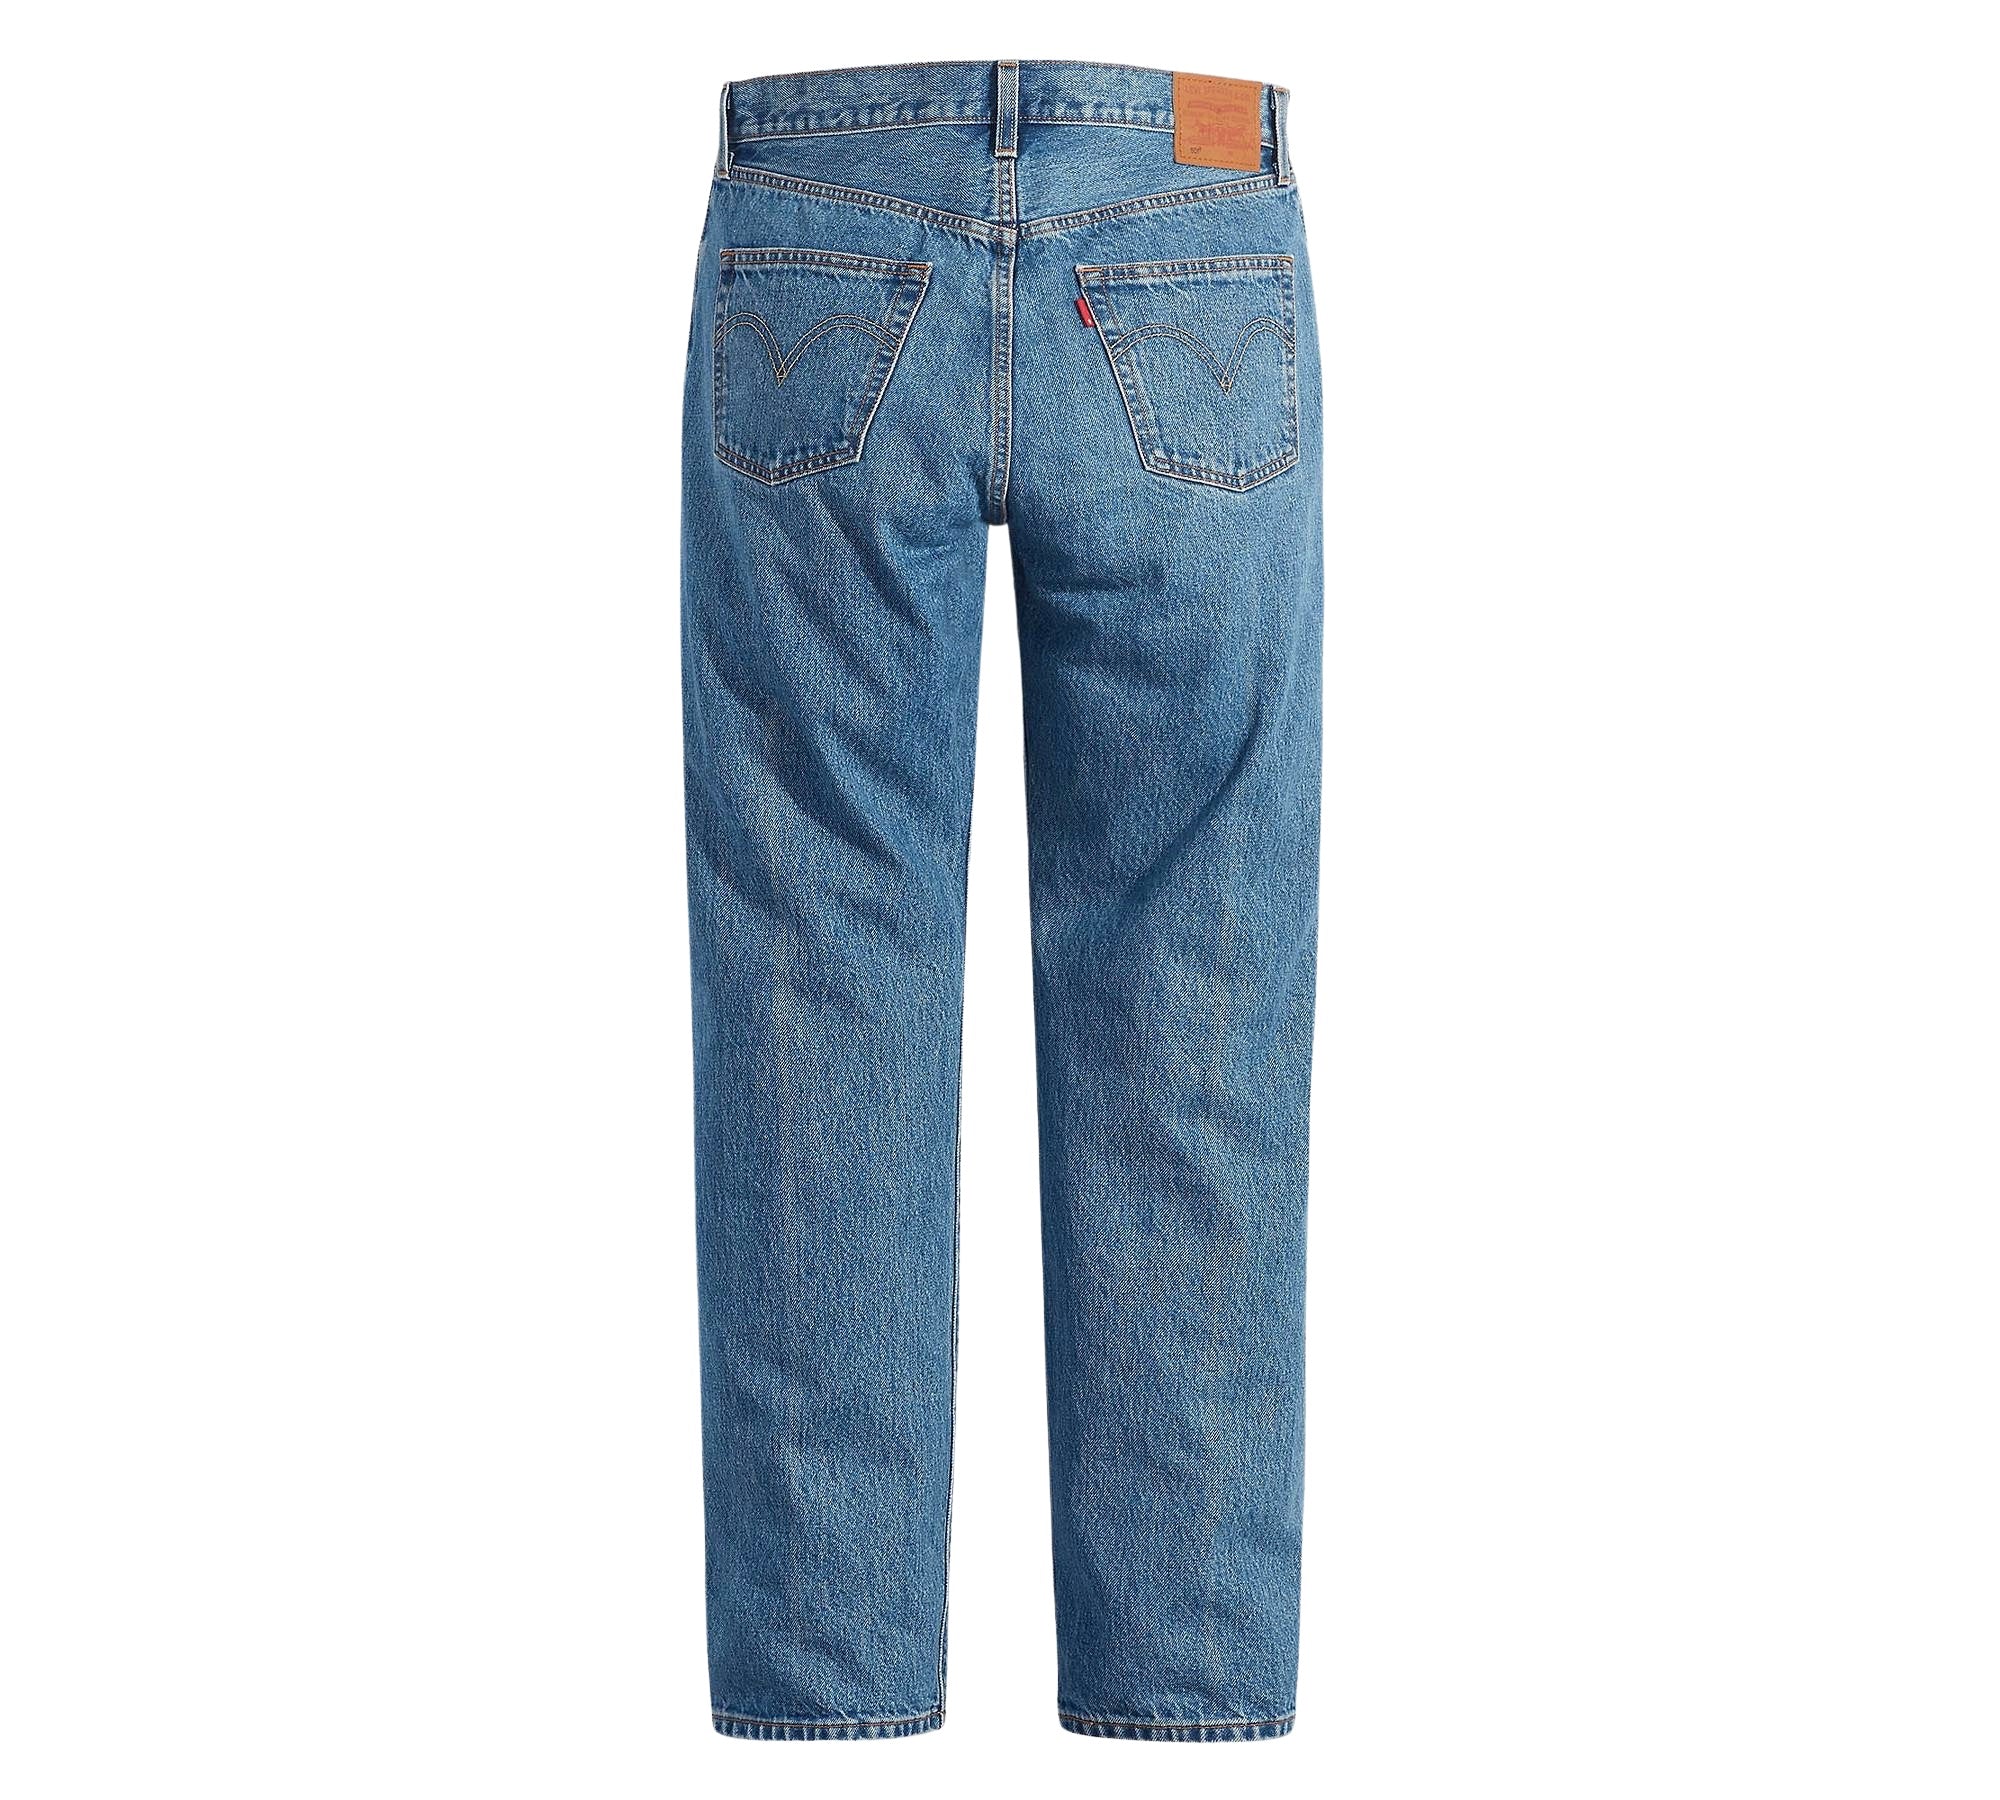 1x Vintage LEVI'S Classic Blue Jeans | Regular Fit | Zip Fly - Waist 36 - Length 34